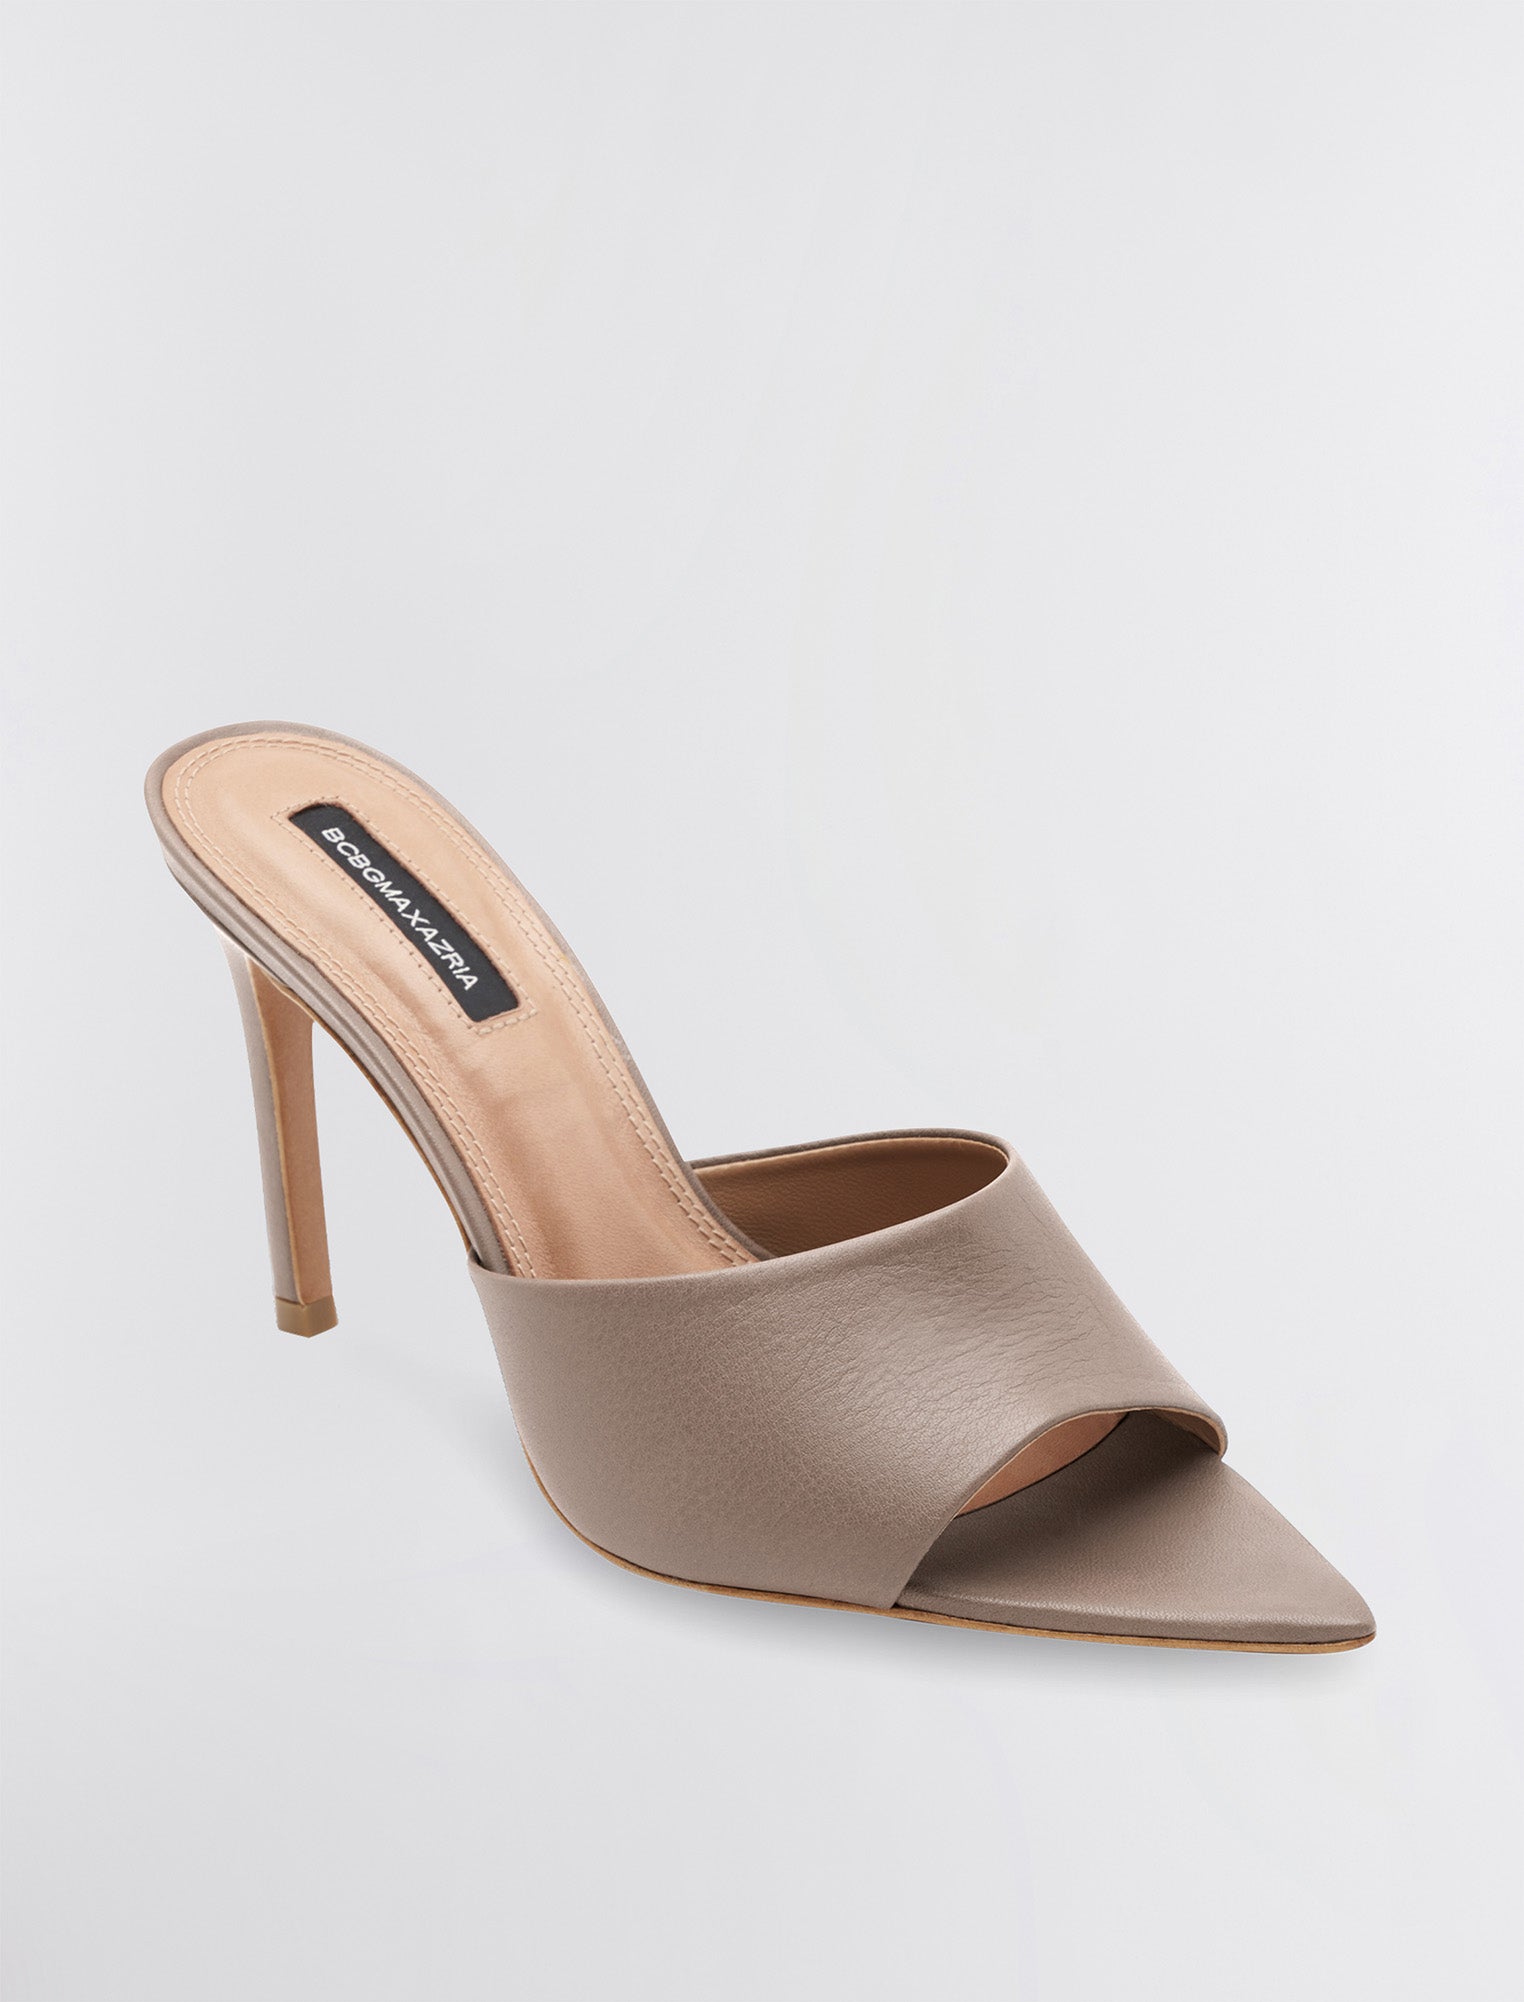 Chestnut Dana Sandal Heel | Shoes | BCBGMAXAZRIA